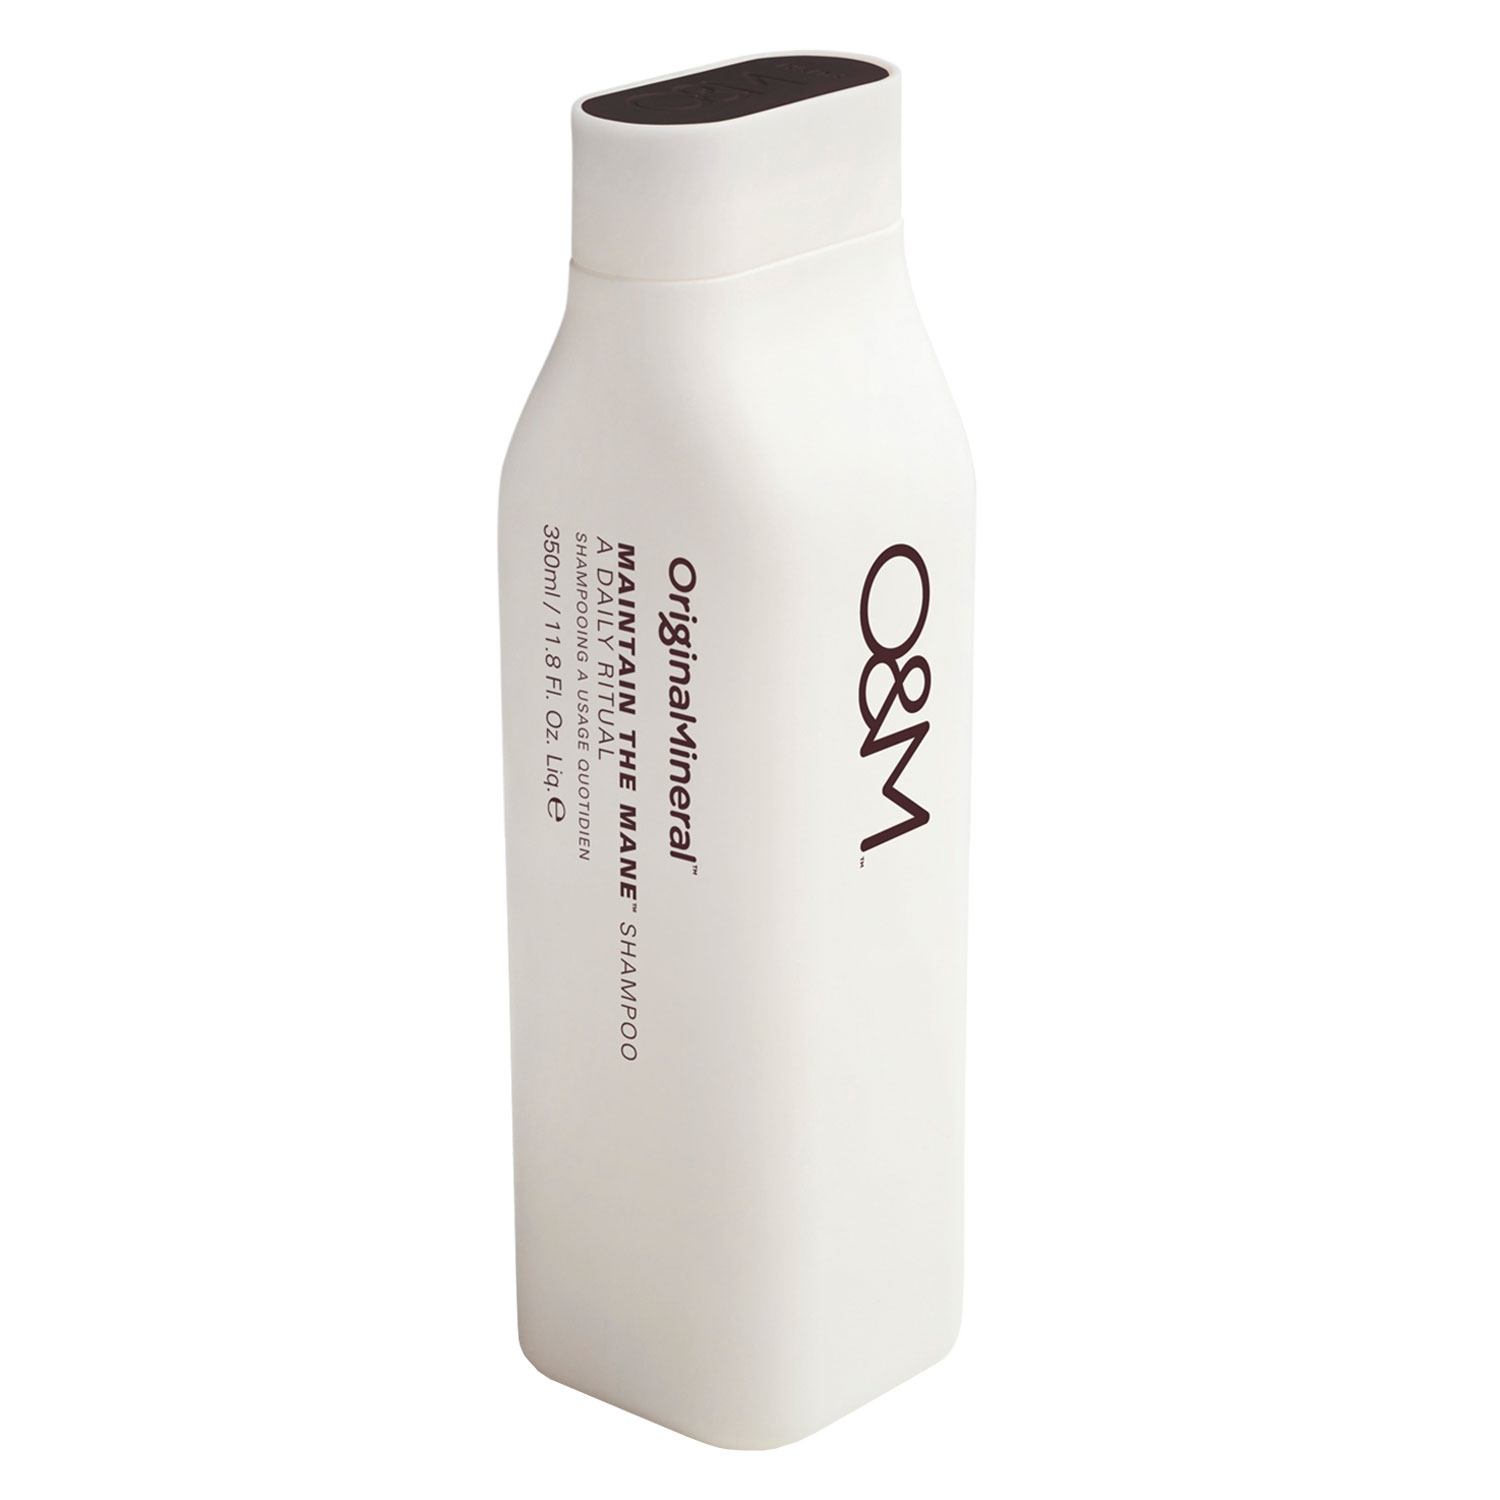 Produktbild von O&M Haircare - Maintain the Mane Daily Shampoo